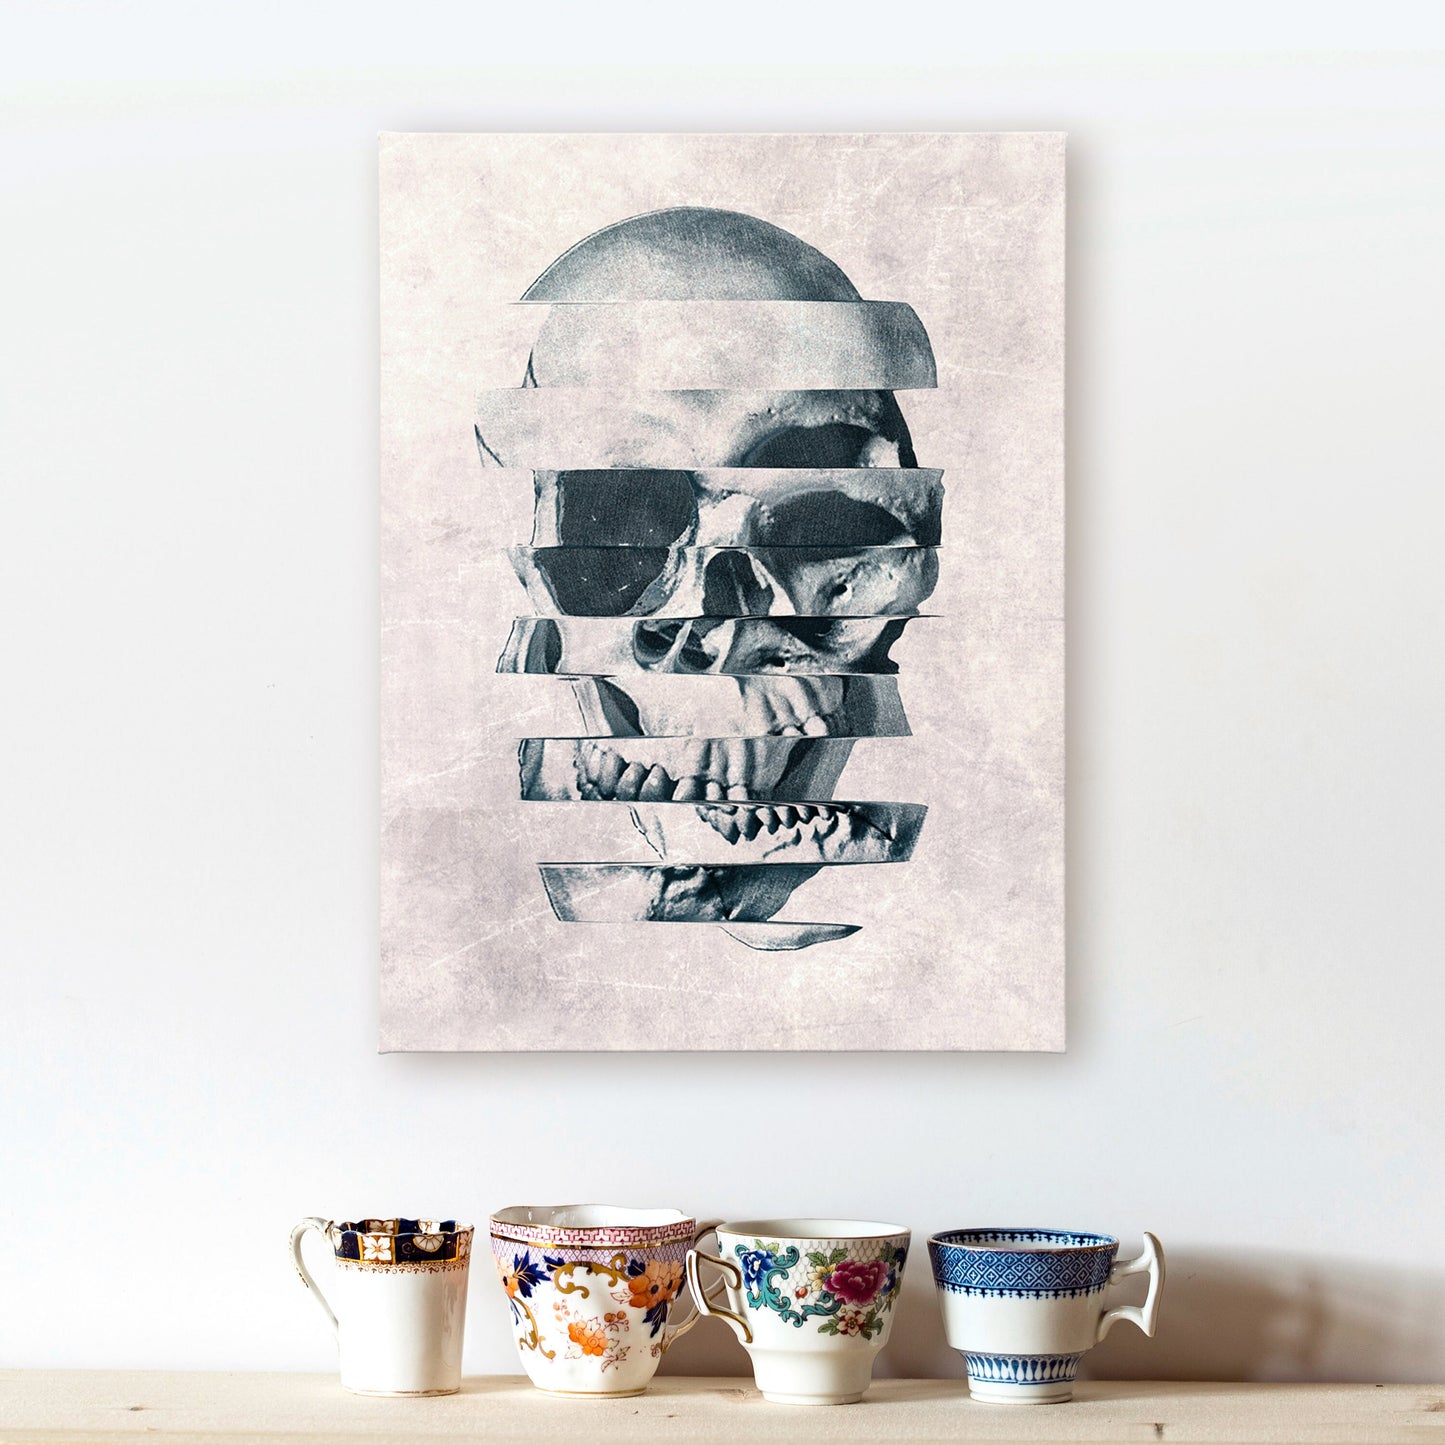 Glitch Skull Canvas Print, Abstract Skull Canvas Art Print, Sugar Skull Canvas Art Home Decor Gift, Black And White Gothic Skull Wall Art